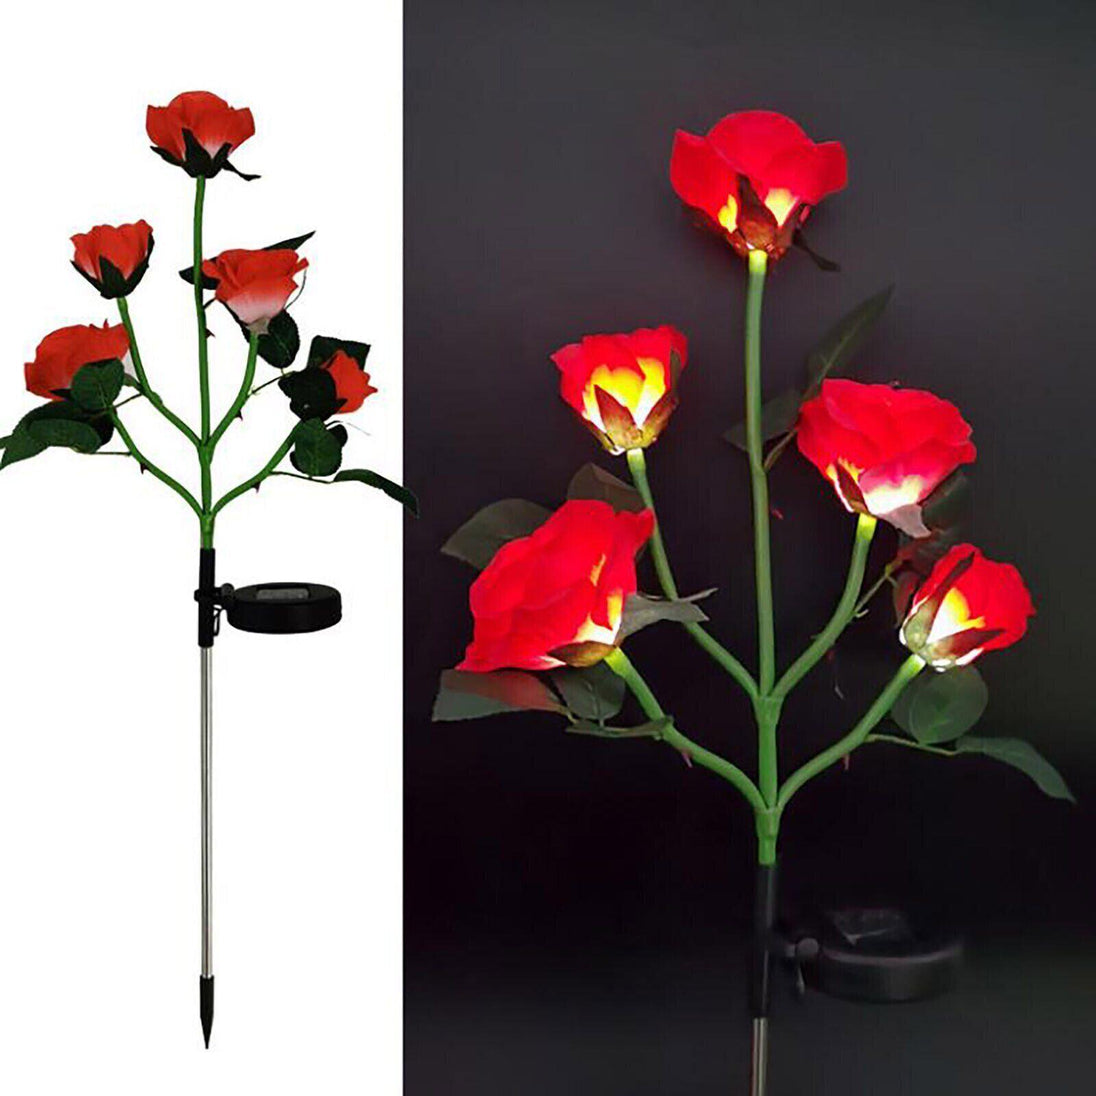 Buy Red Bulk Solar Garden Lights 75cm Long Rose Flowers Yard Lamp Xmas Halloween Deco AU discounted | Products On Sale Australia